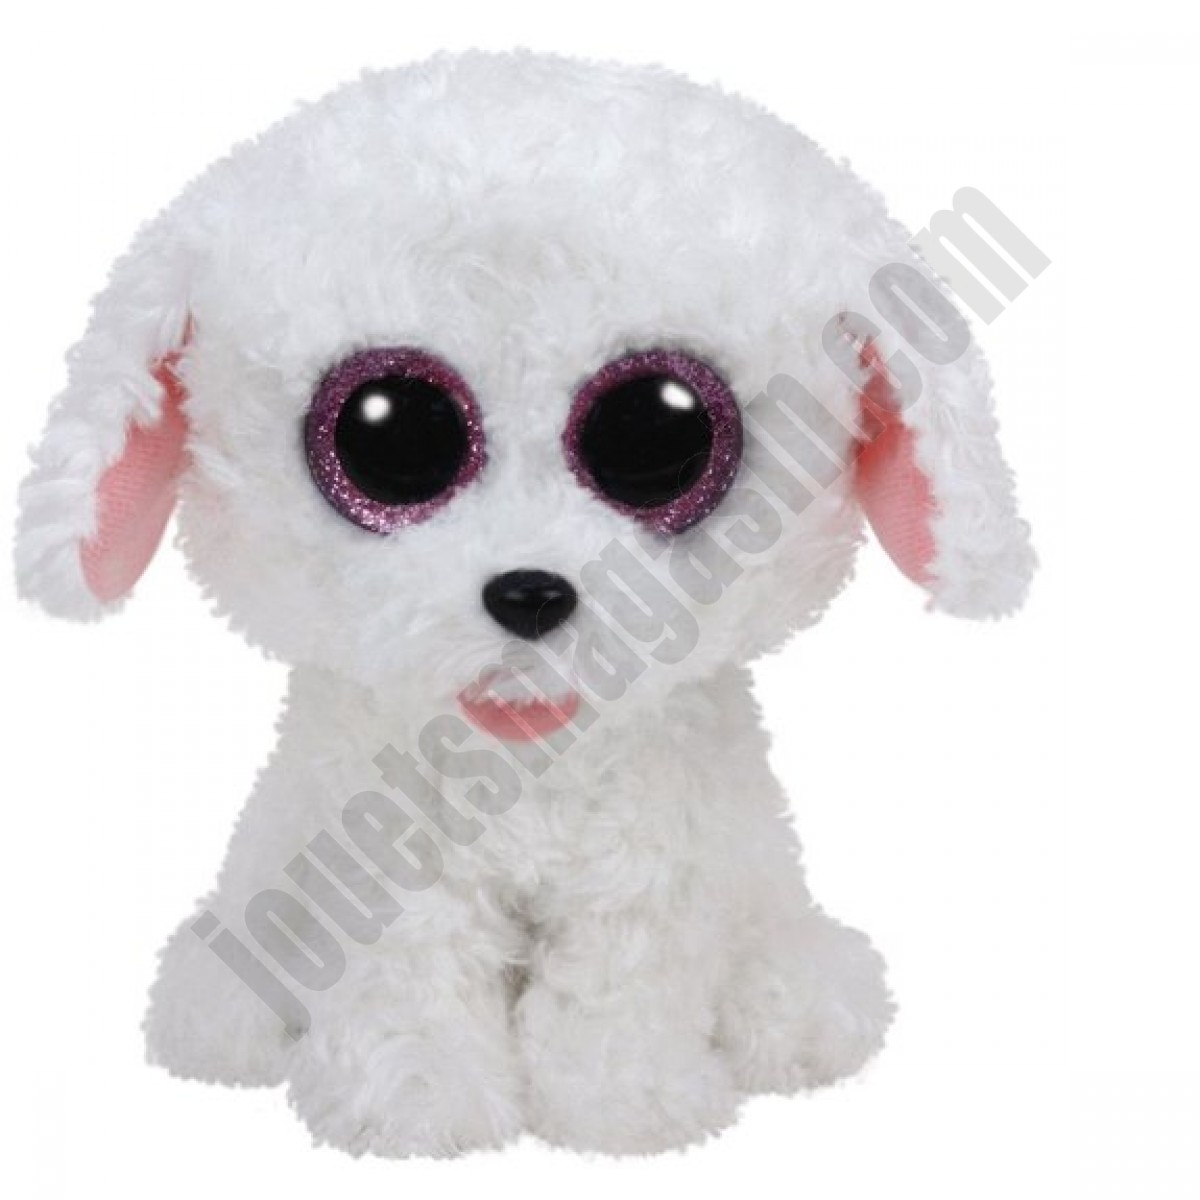 Beanie Boo's 15 cm : Peluche Pippie le chien ◆◆◆ Nouveau - Beanie Boo's 15 cm : Peluche Pippie le chien ◆◆◆ Nouveau